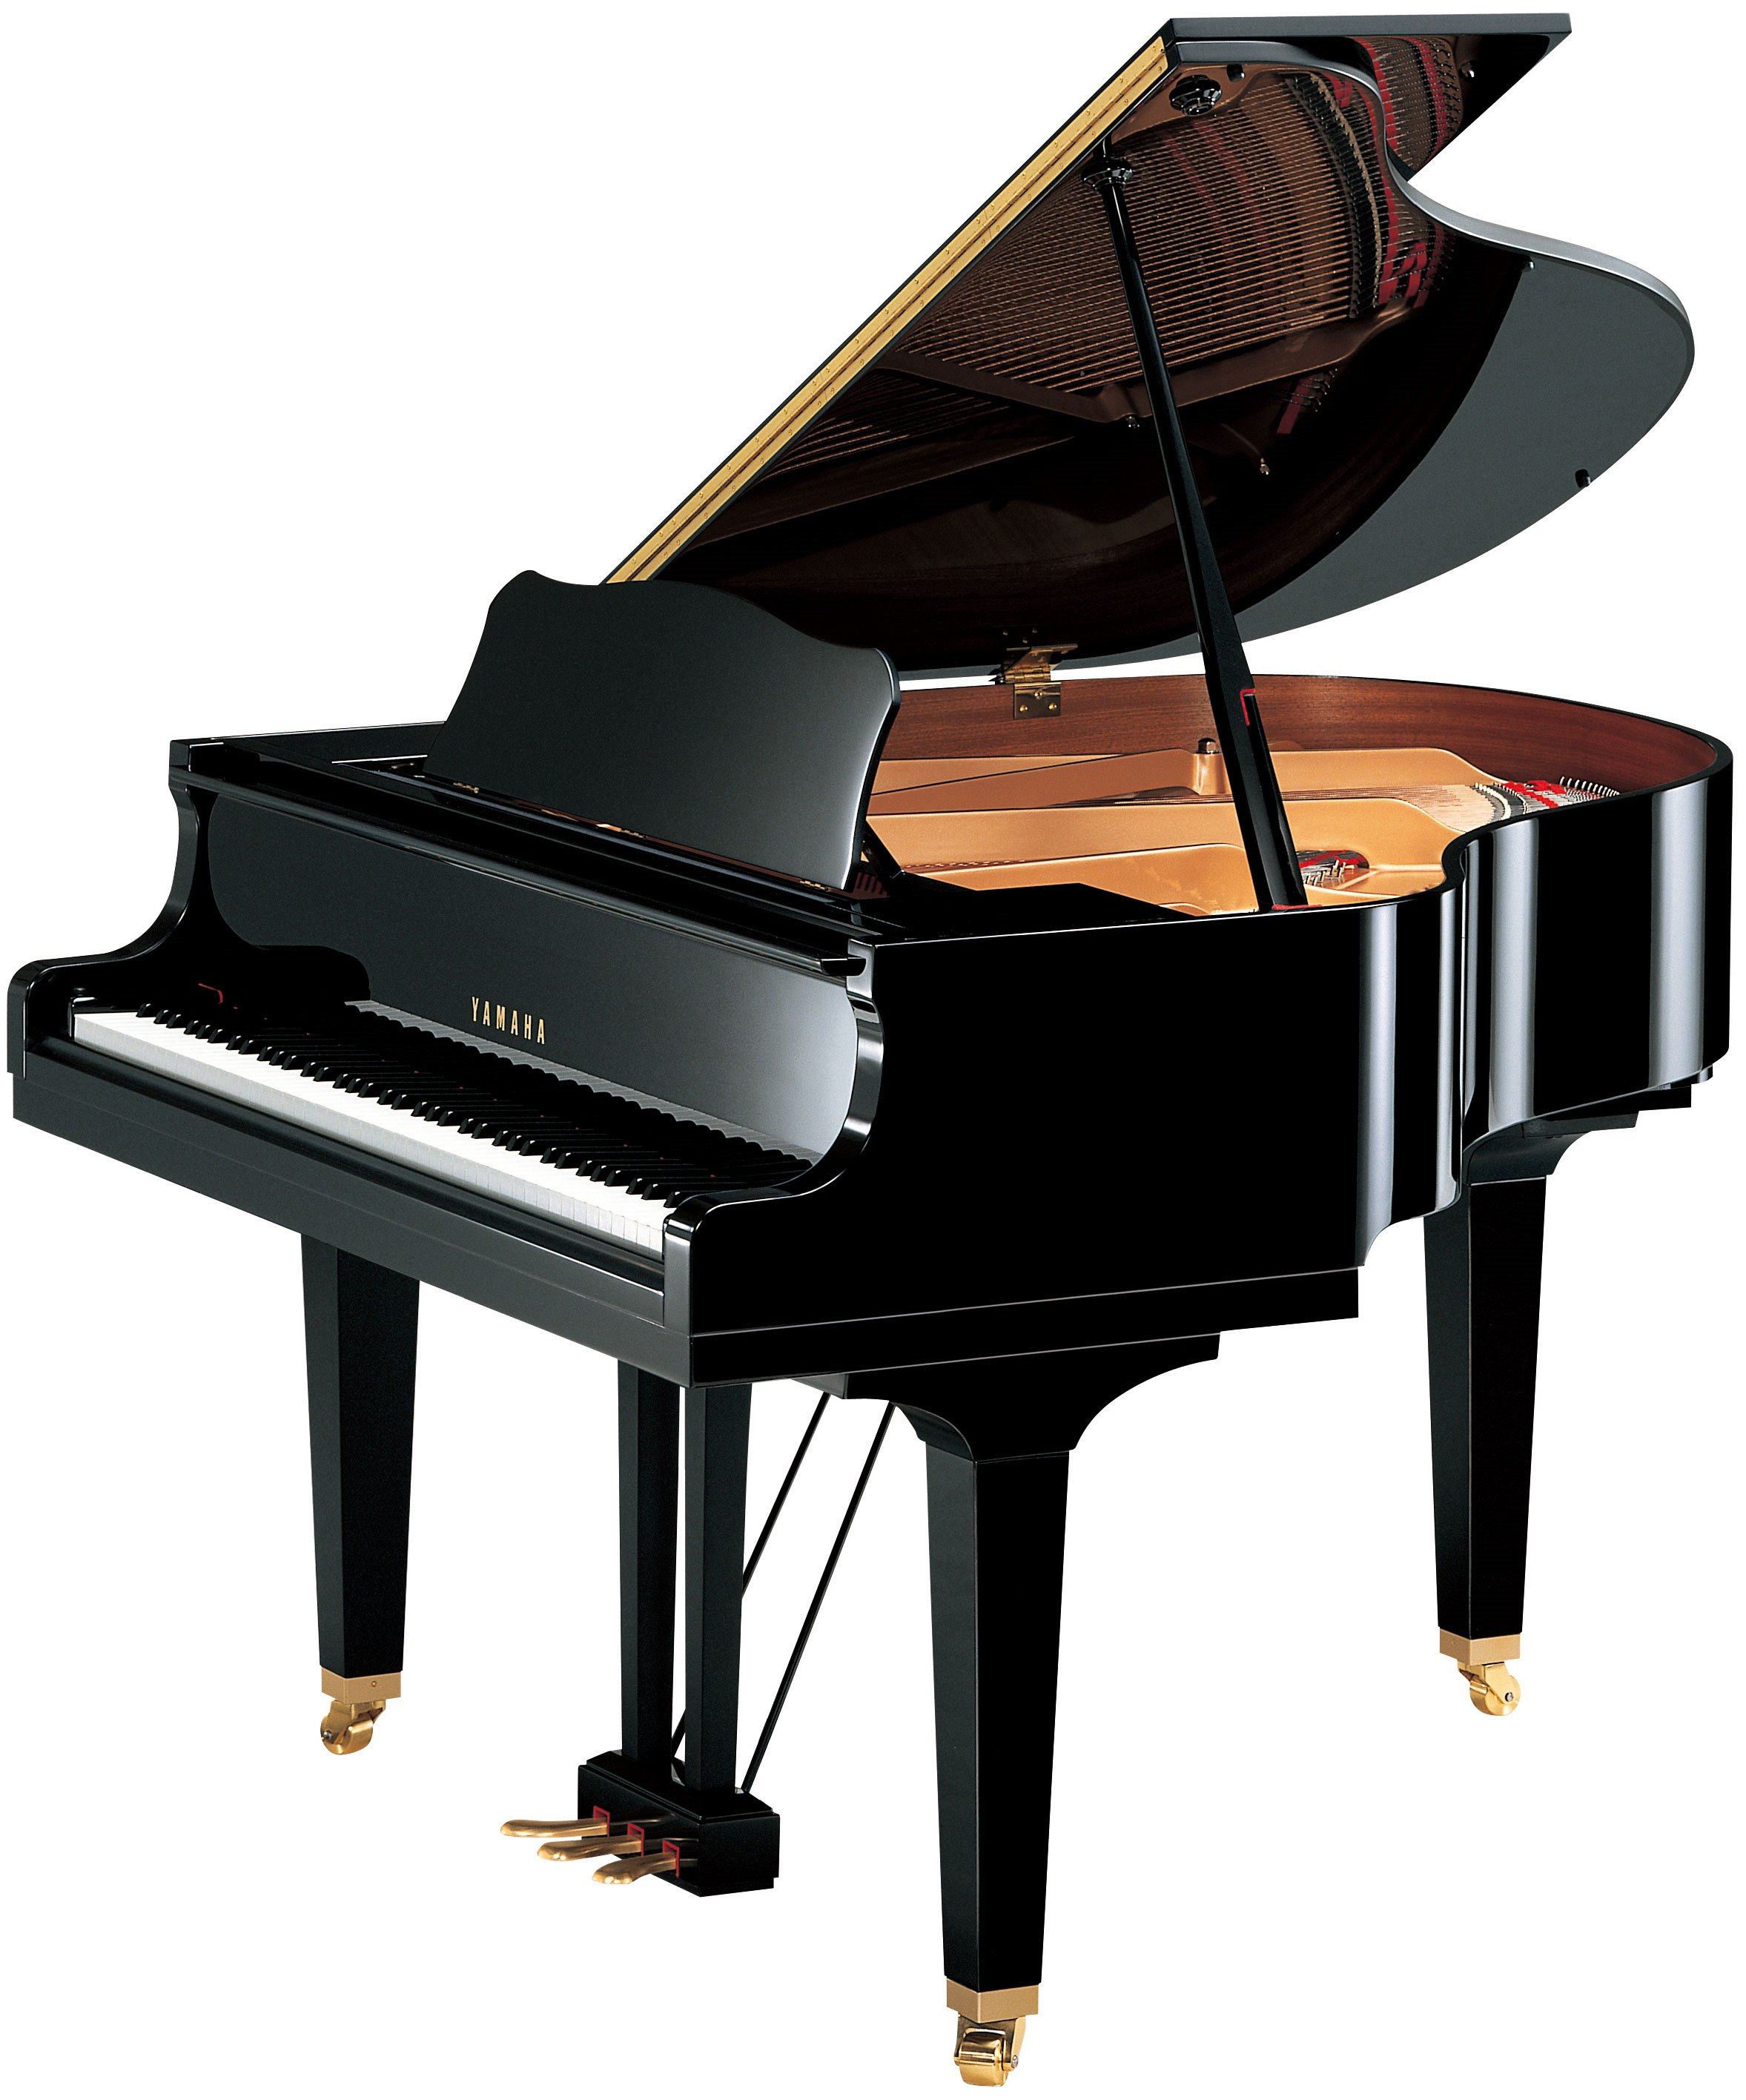 Yamaha Klavier Piano C-113 TPE Schwarz Inkl. Hocker final